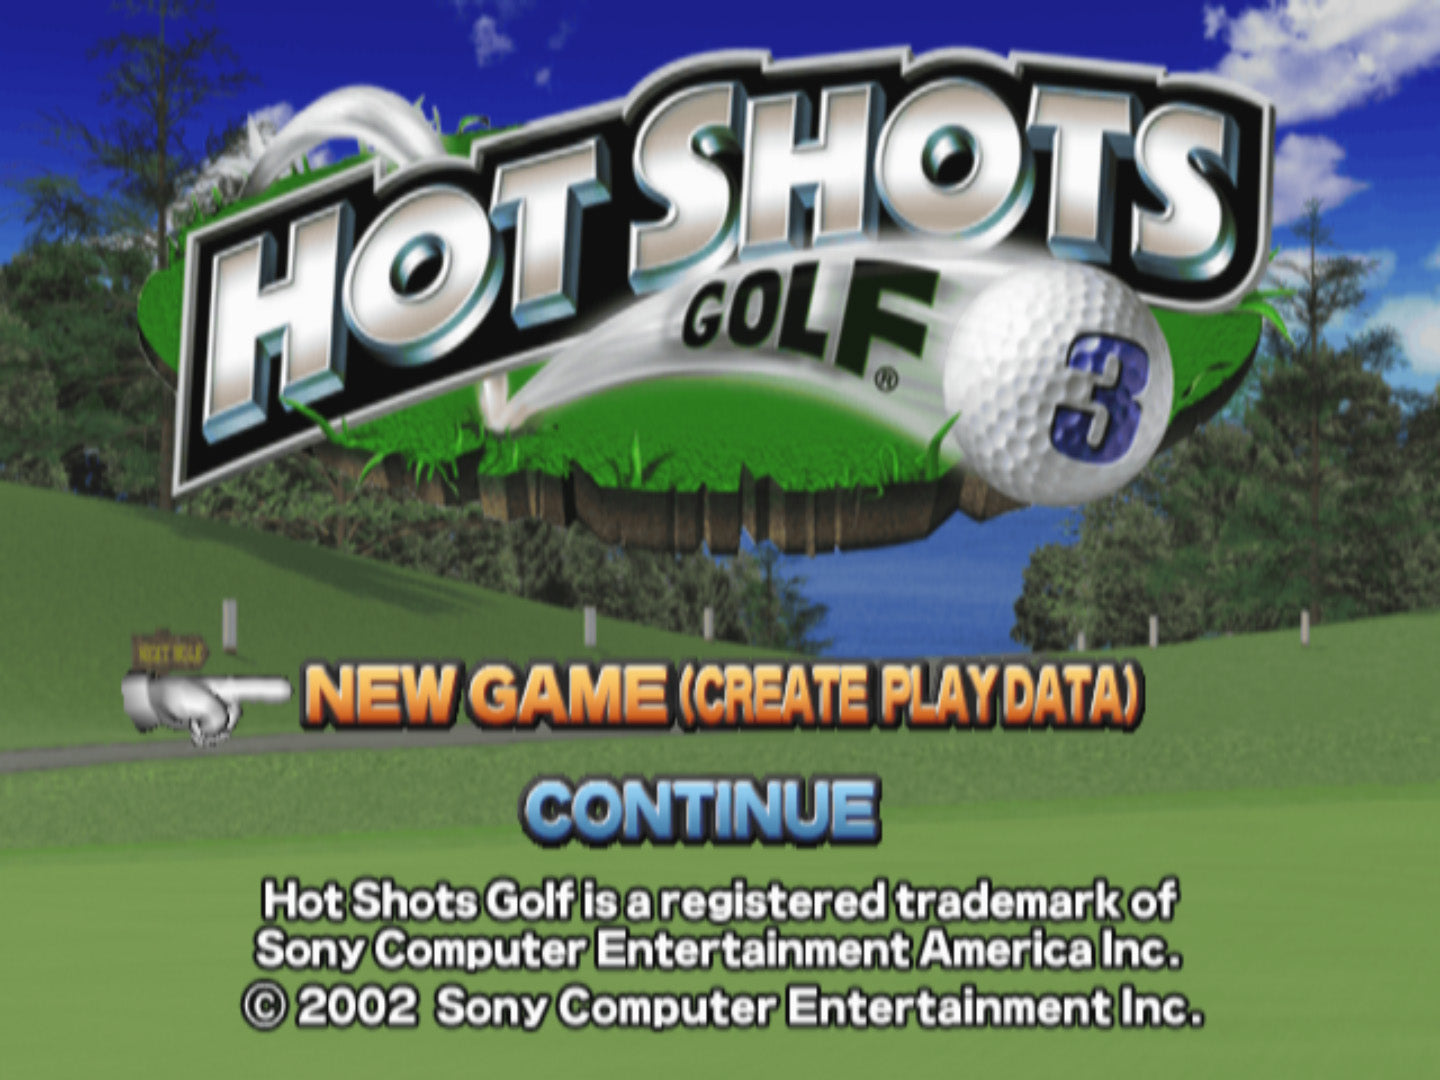 Hot Shots Golf 3 (Greatest Hits) - PlayStation 2 (PS2) Game